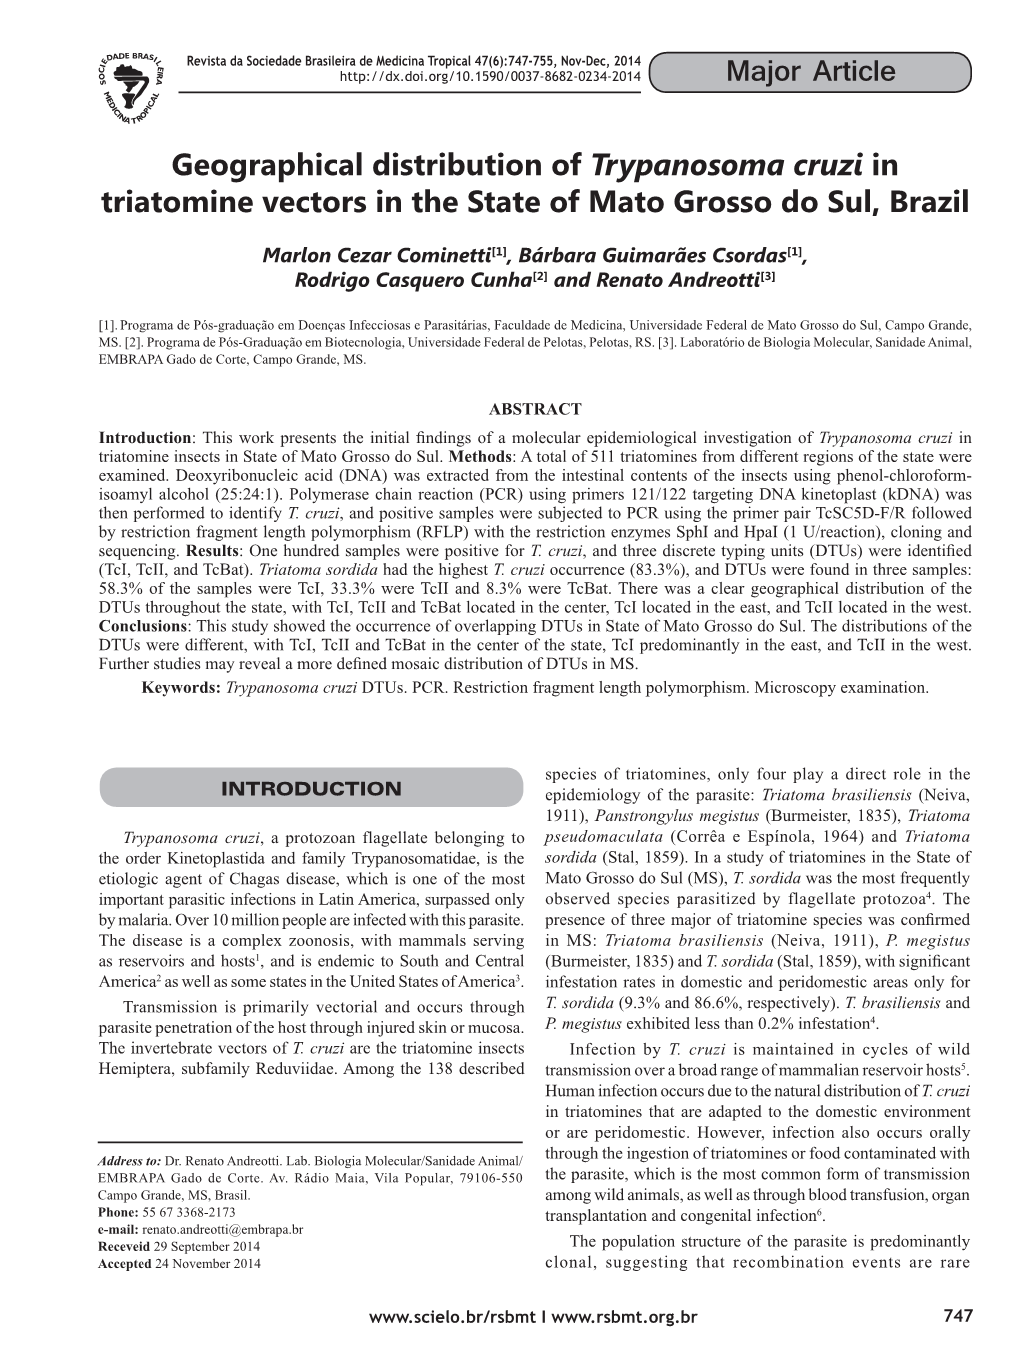 Geographical Distribution of Trypanosoma Cruzi in Triatomine Vectors in the State of Mato Grosso Do Sul, Brazil